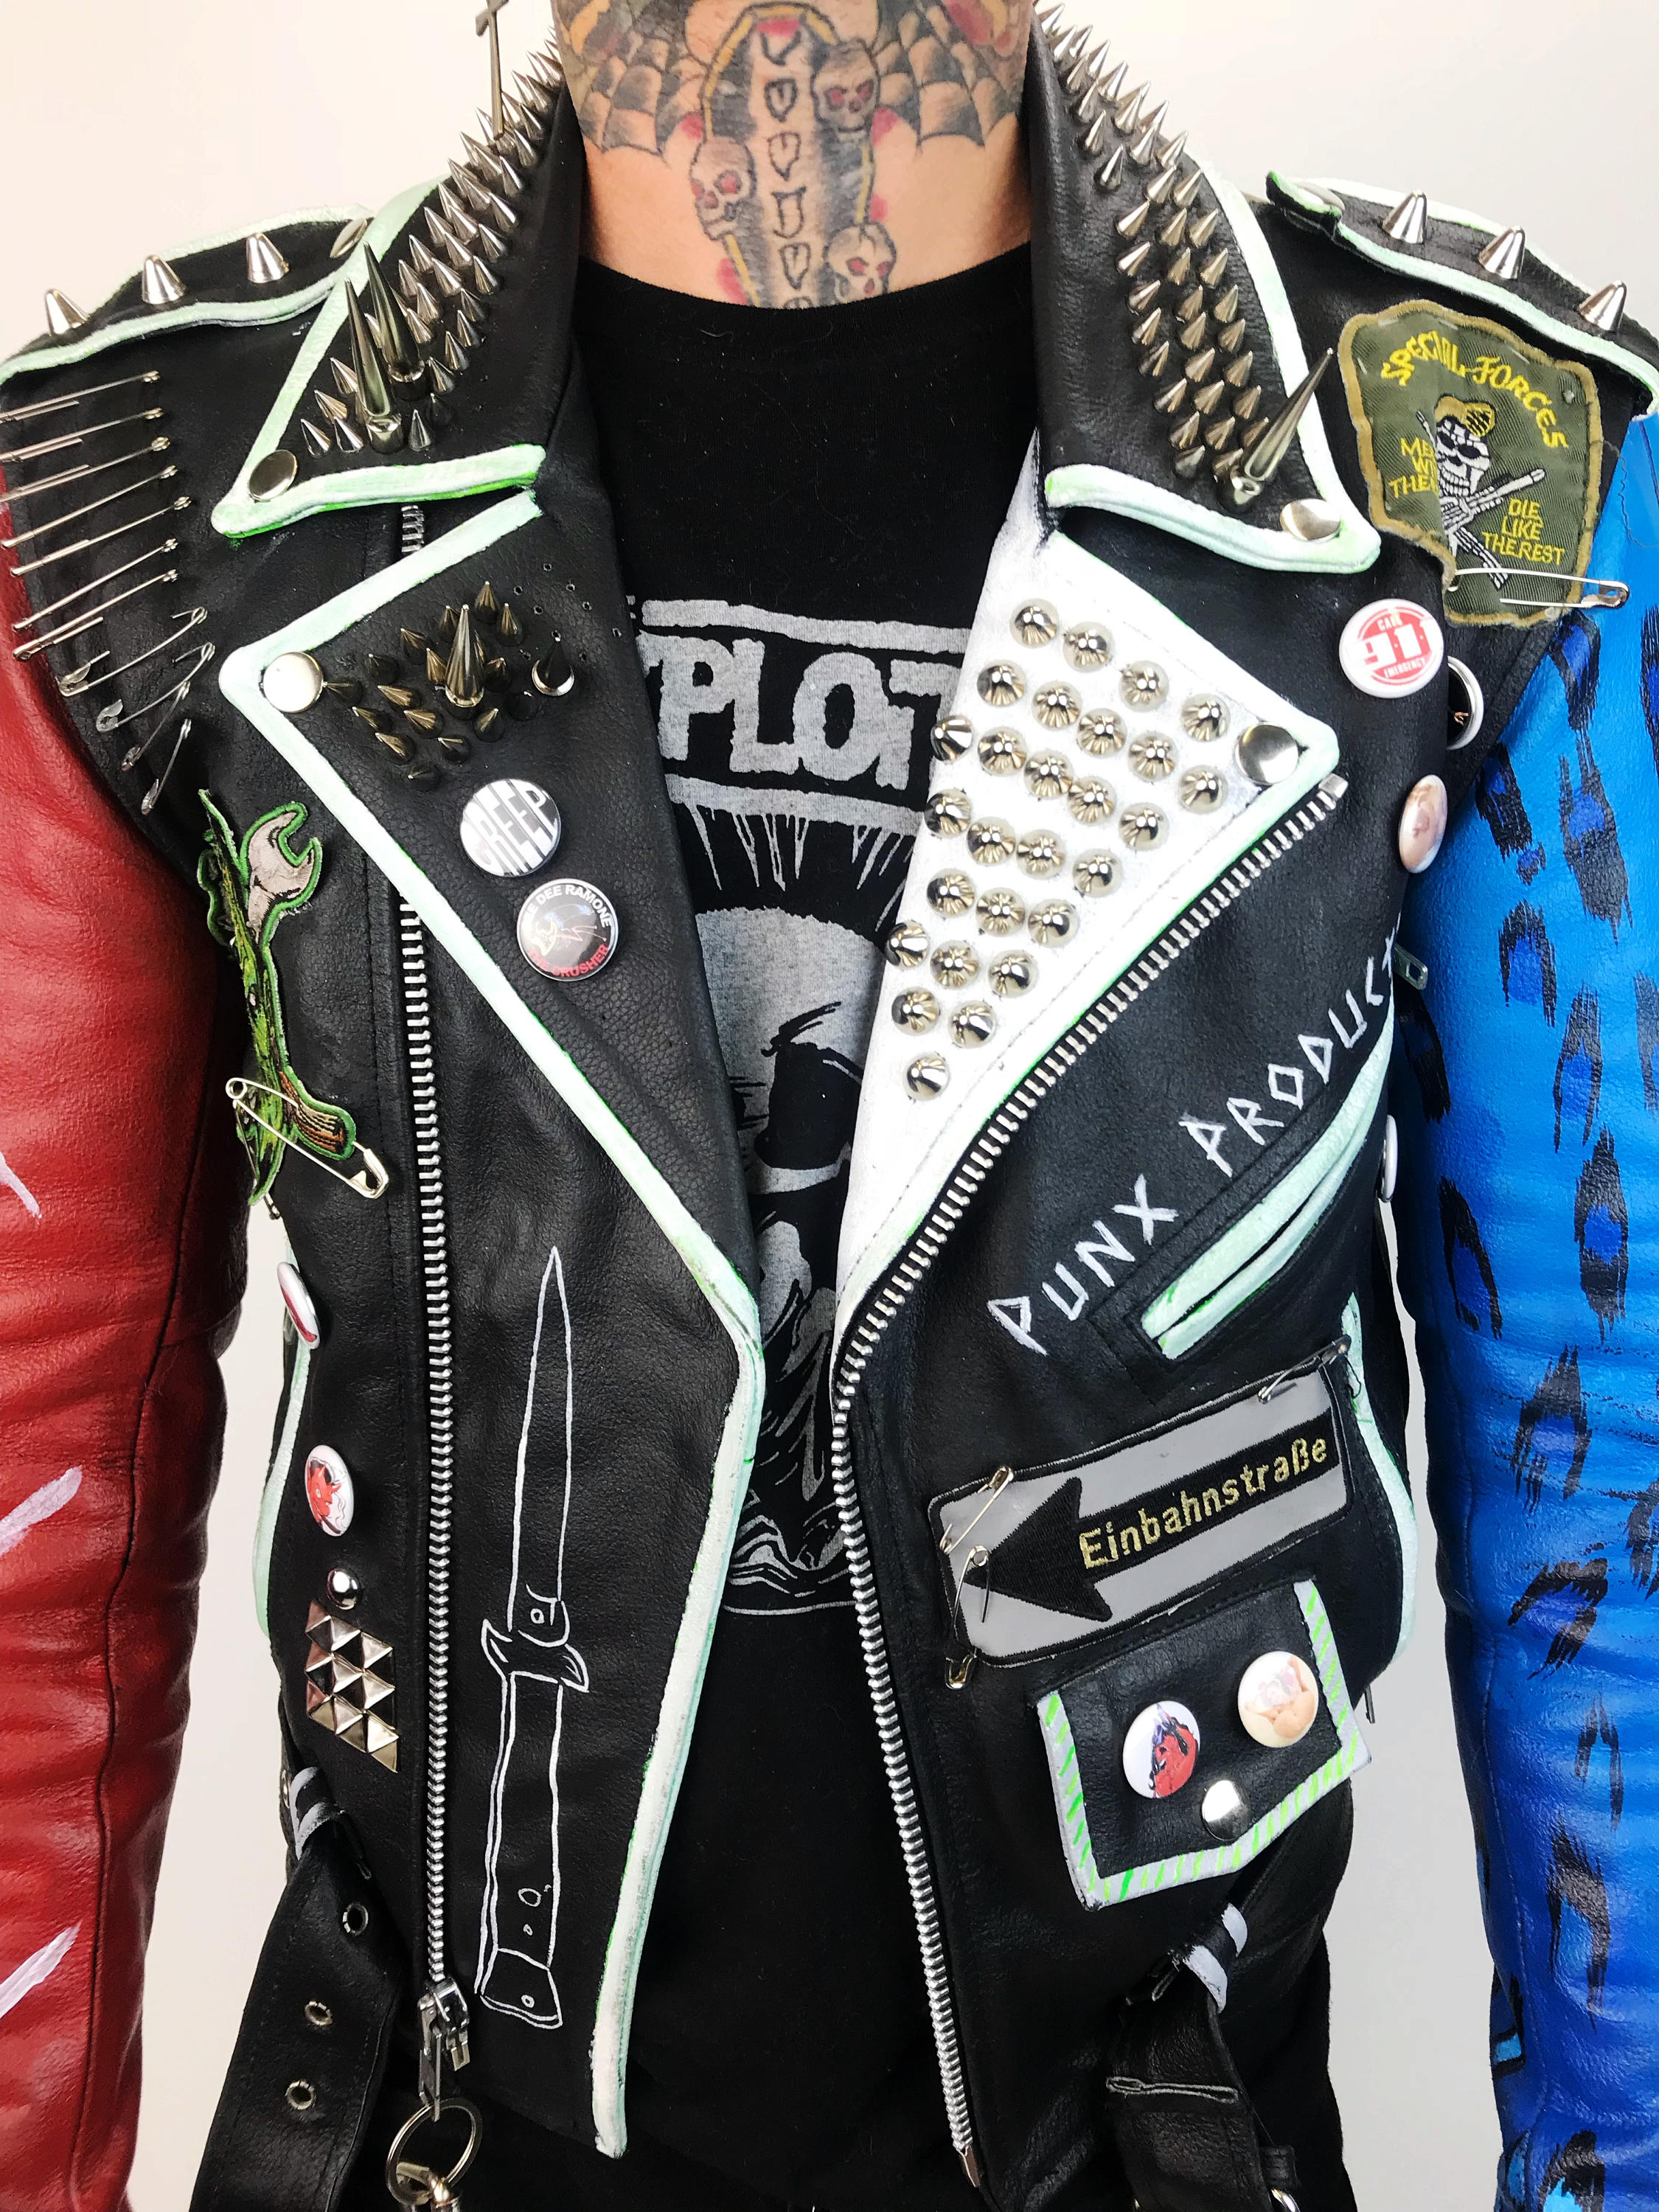 Diy Punk Jacket / DIY Punk Studded Denim Jacket - My diy punk leather